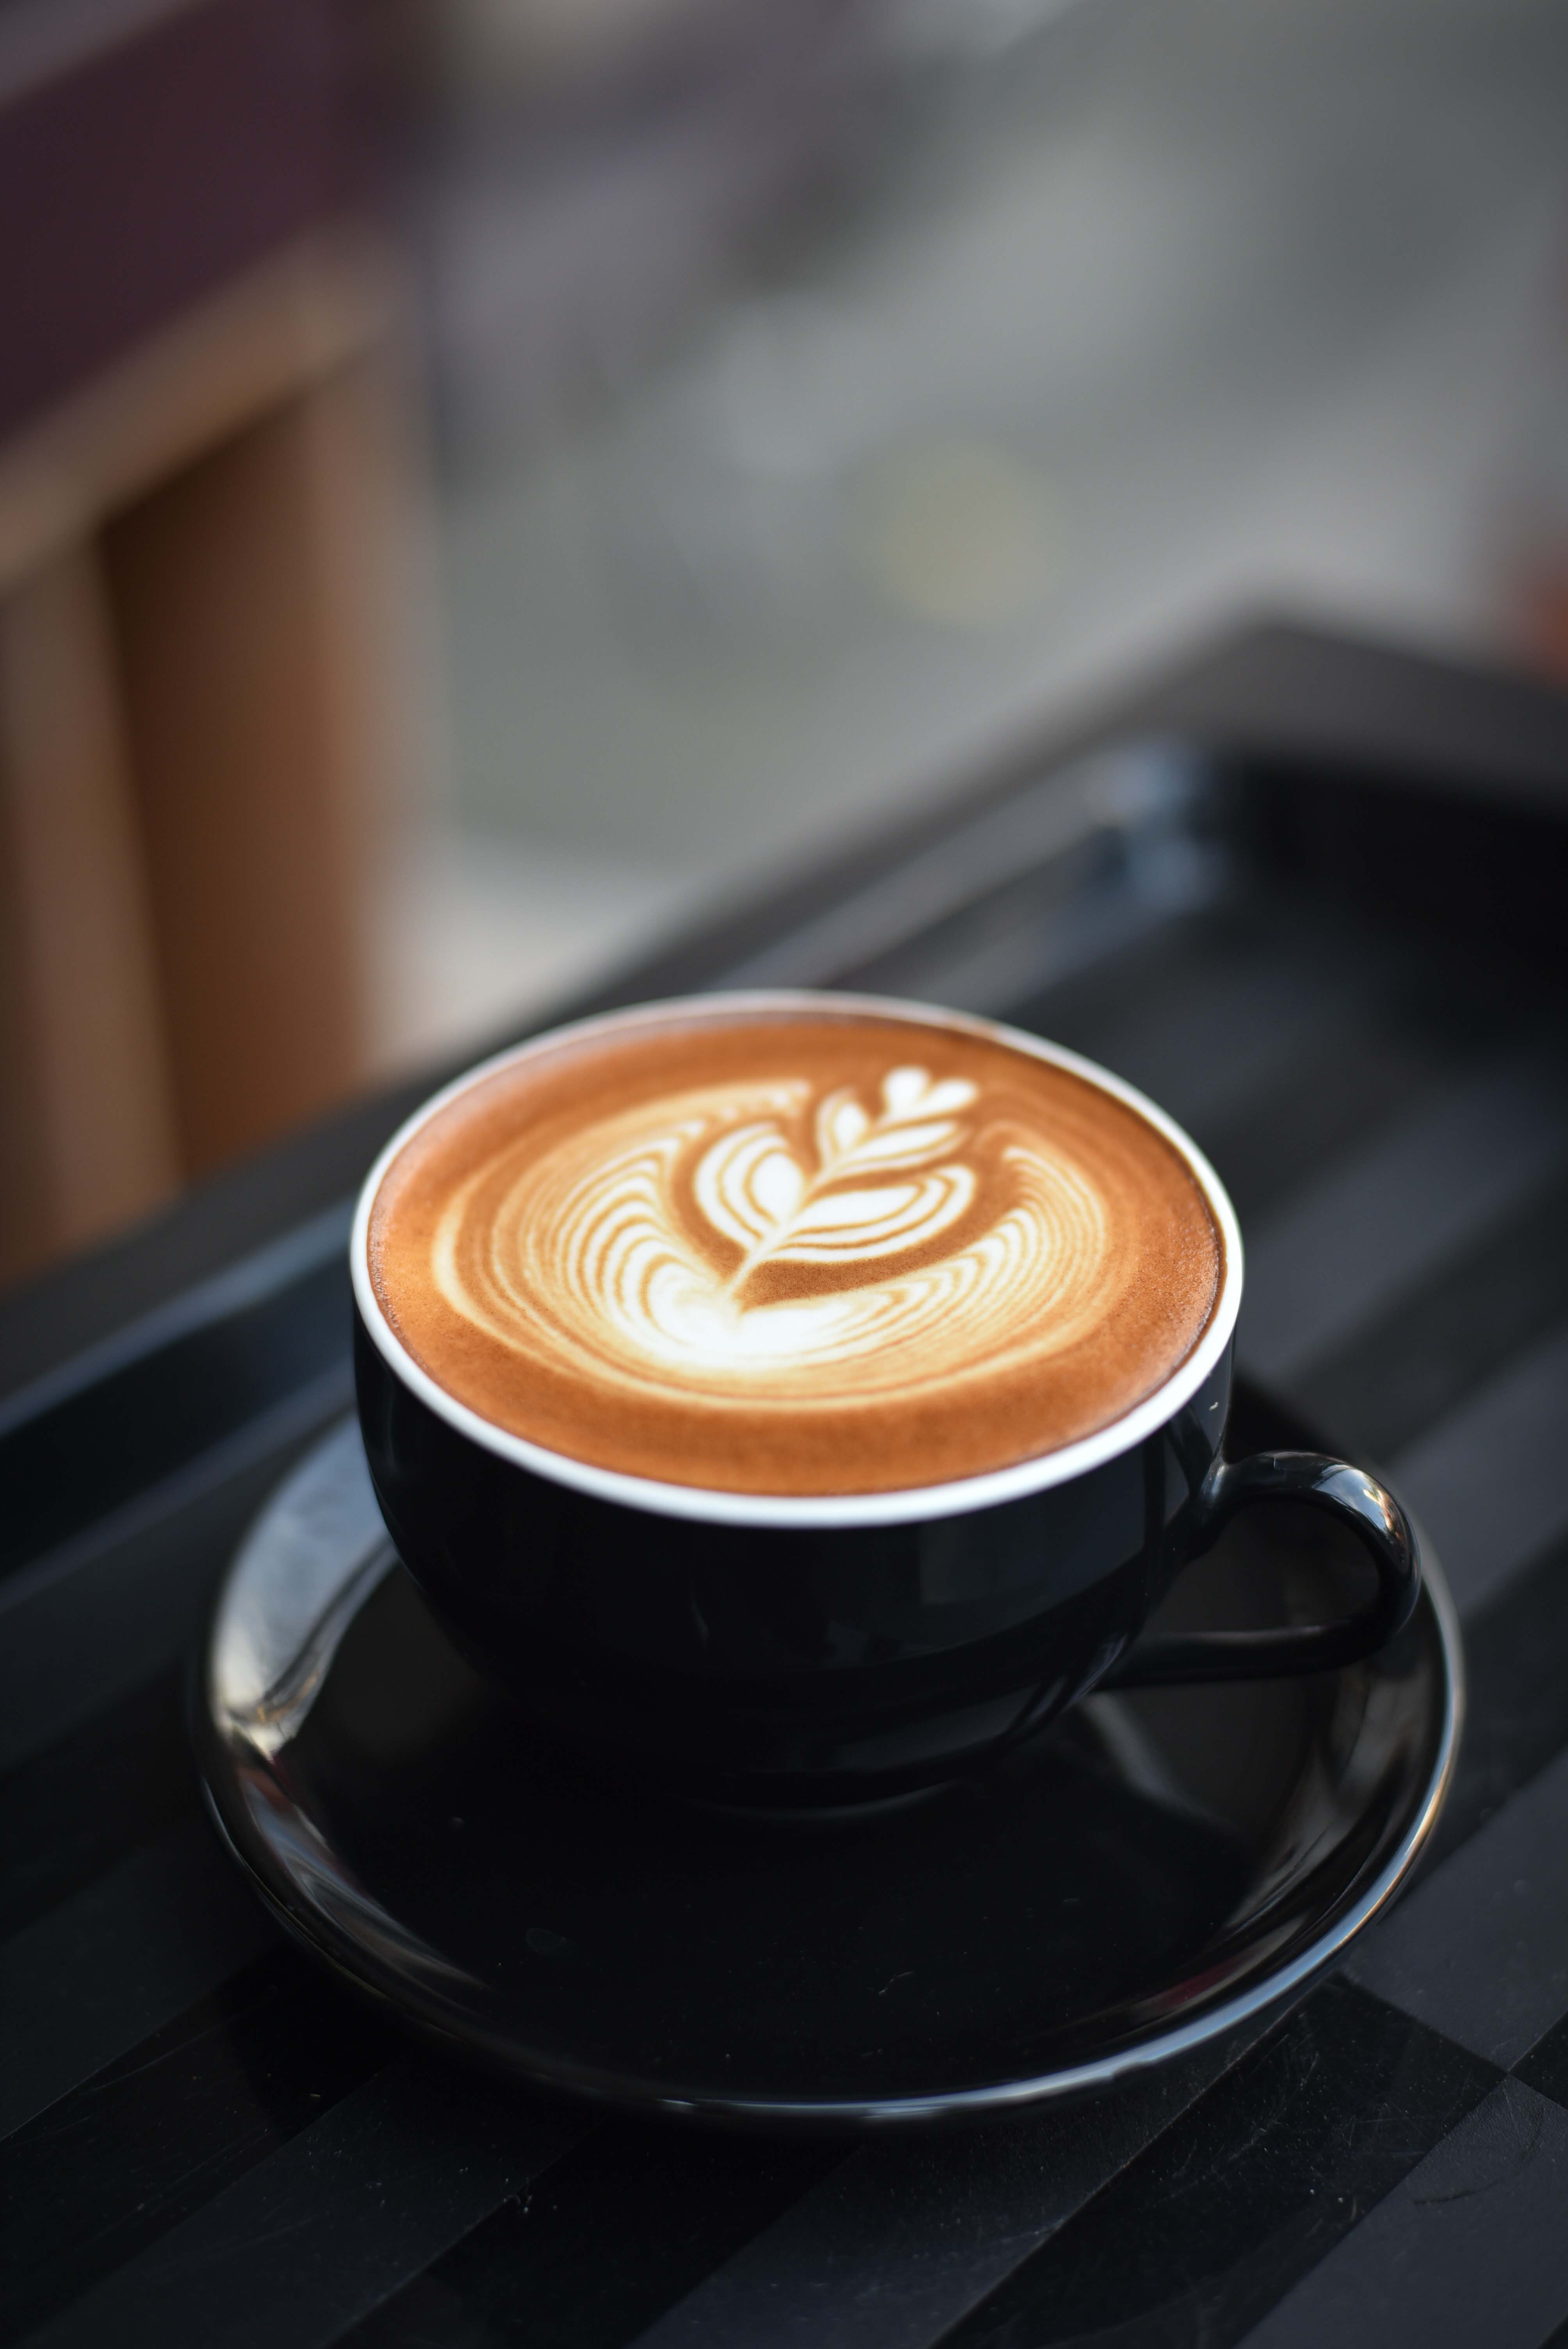 Is Kona Coffee worth it?